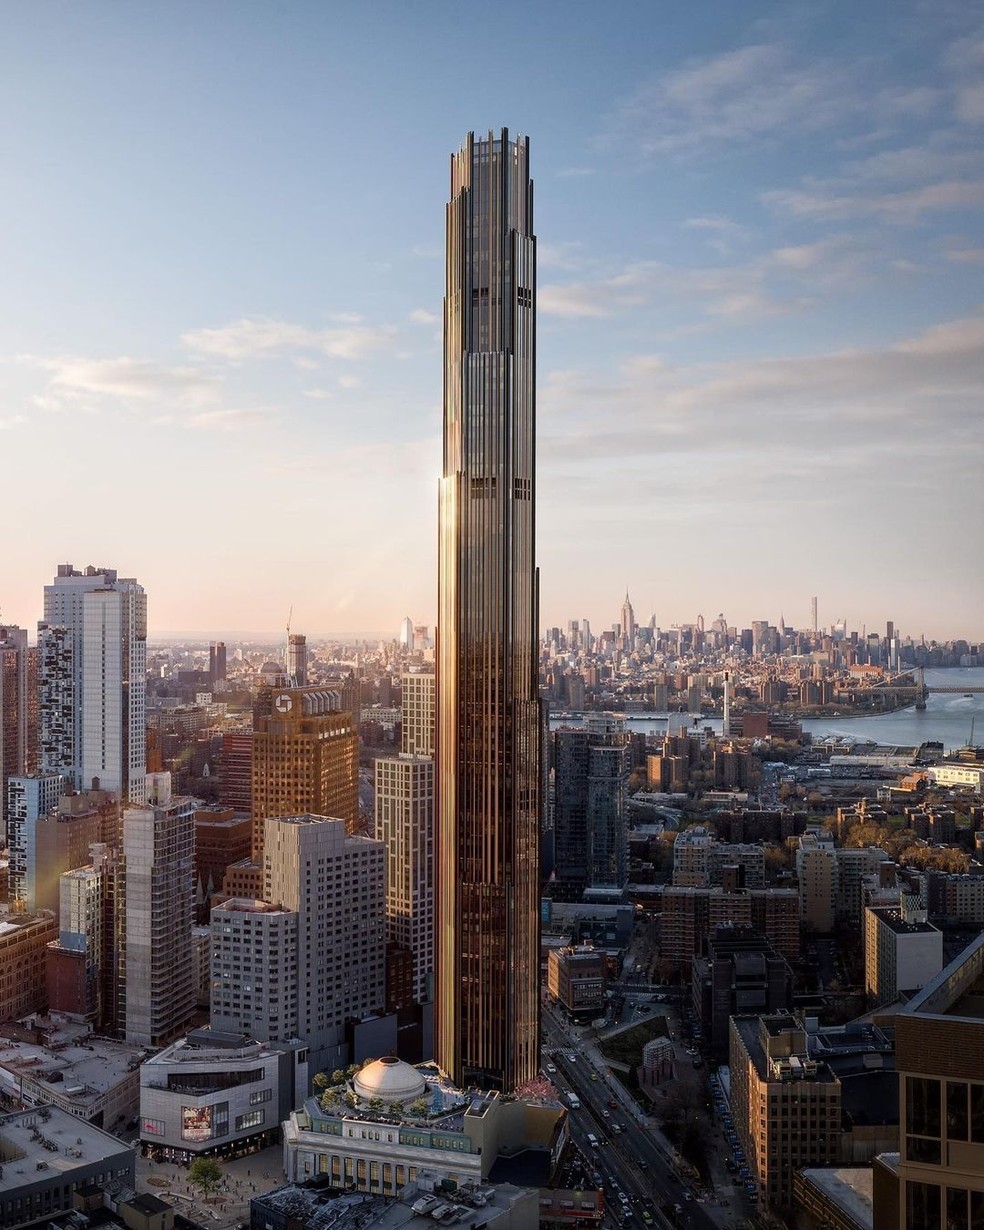 325m skyscraper opens in US - Photo: Disclosure / Brooklyn Tower